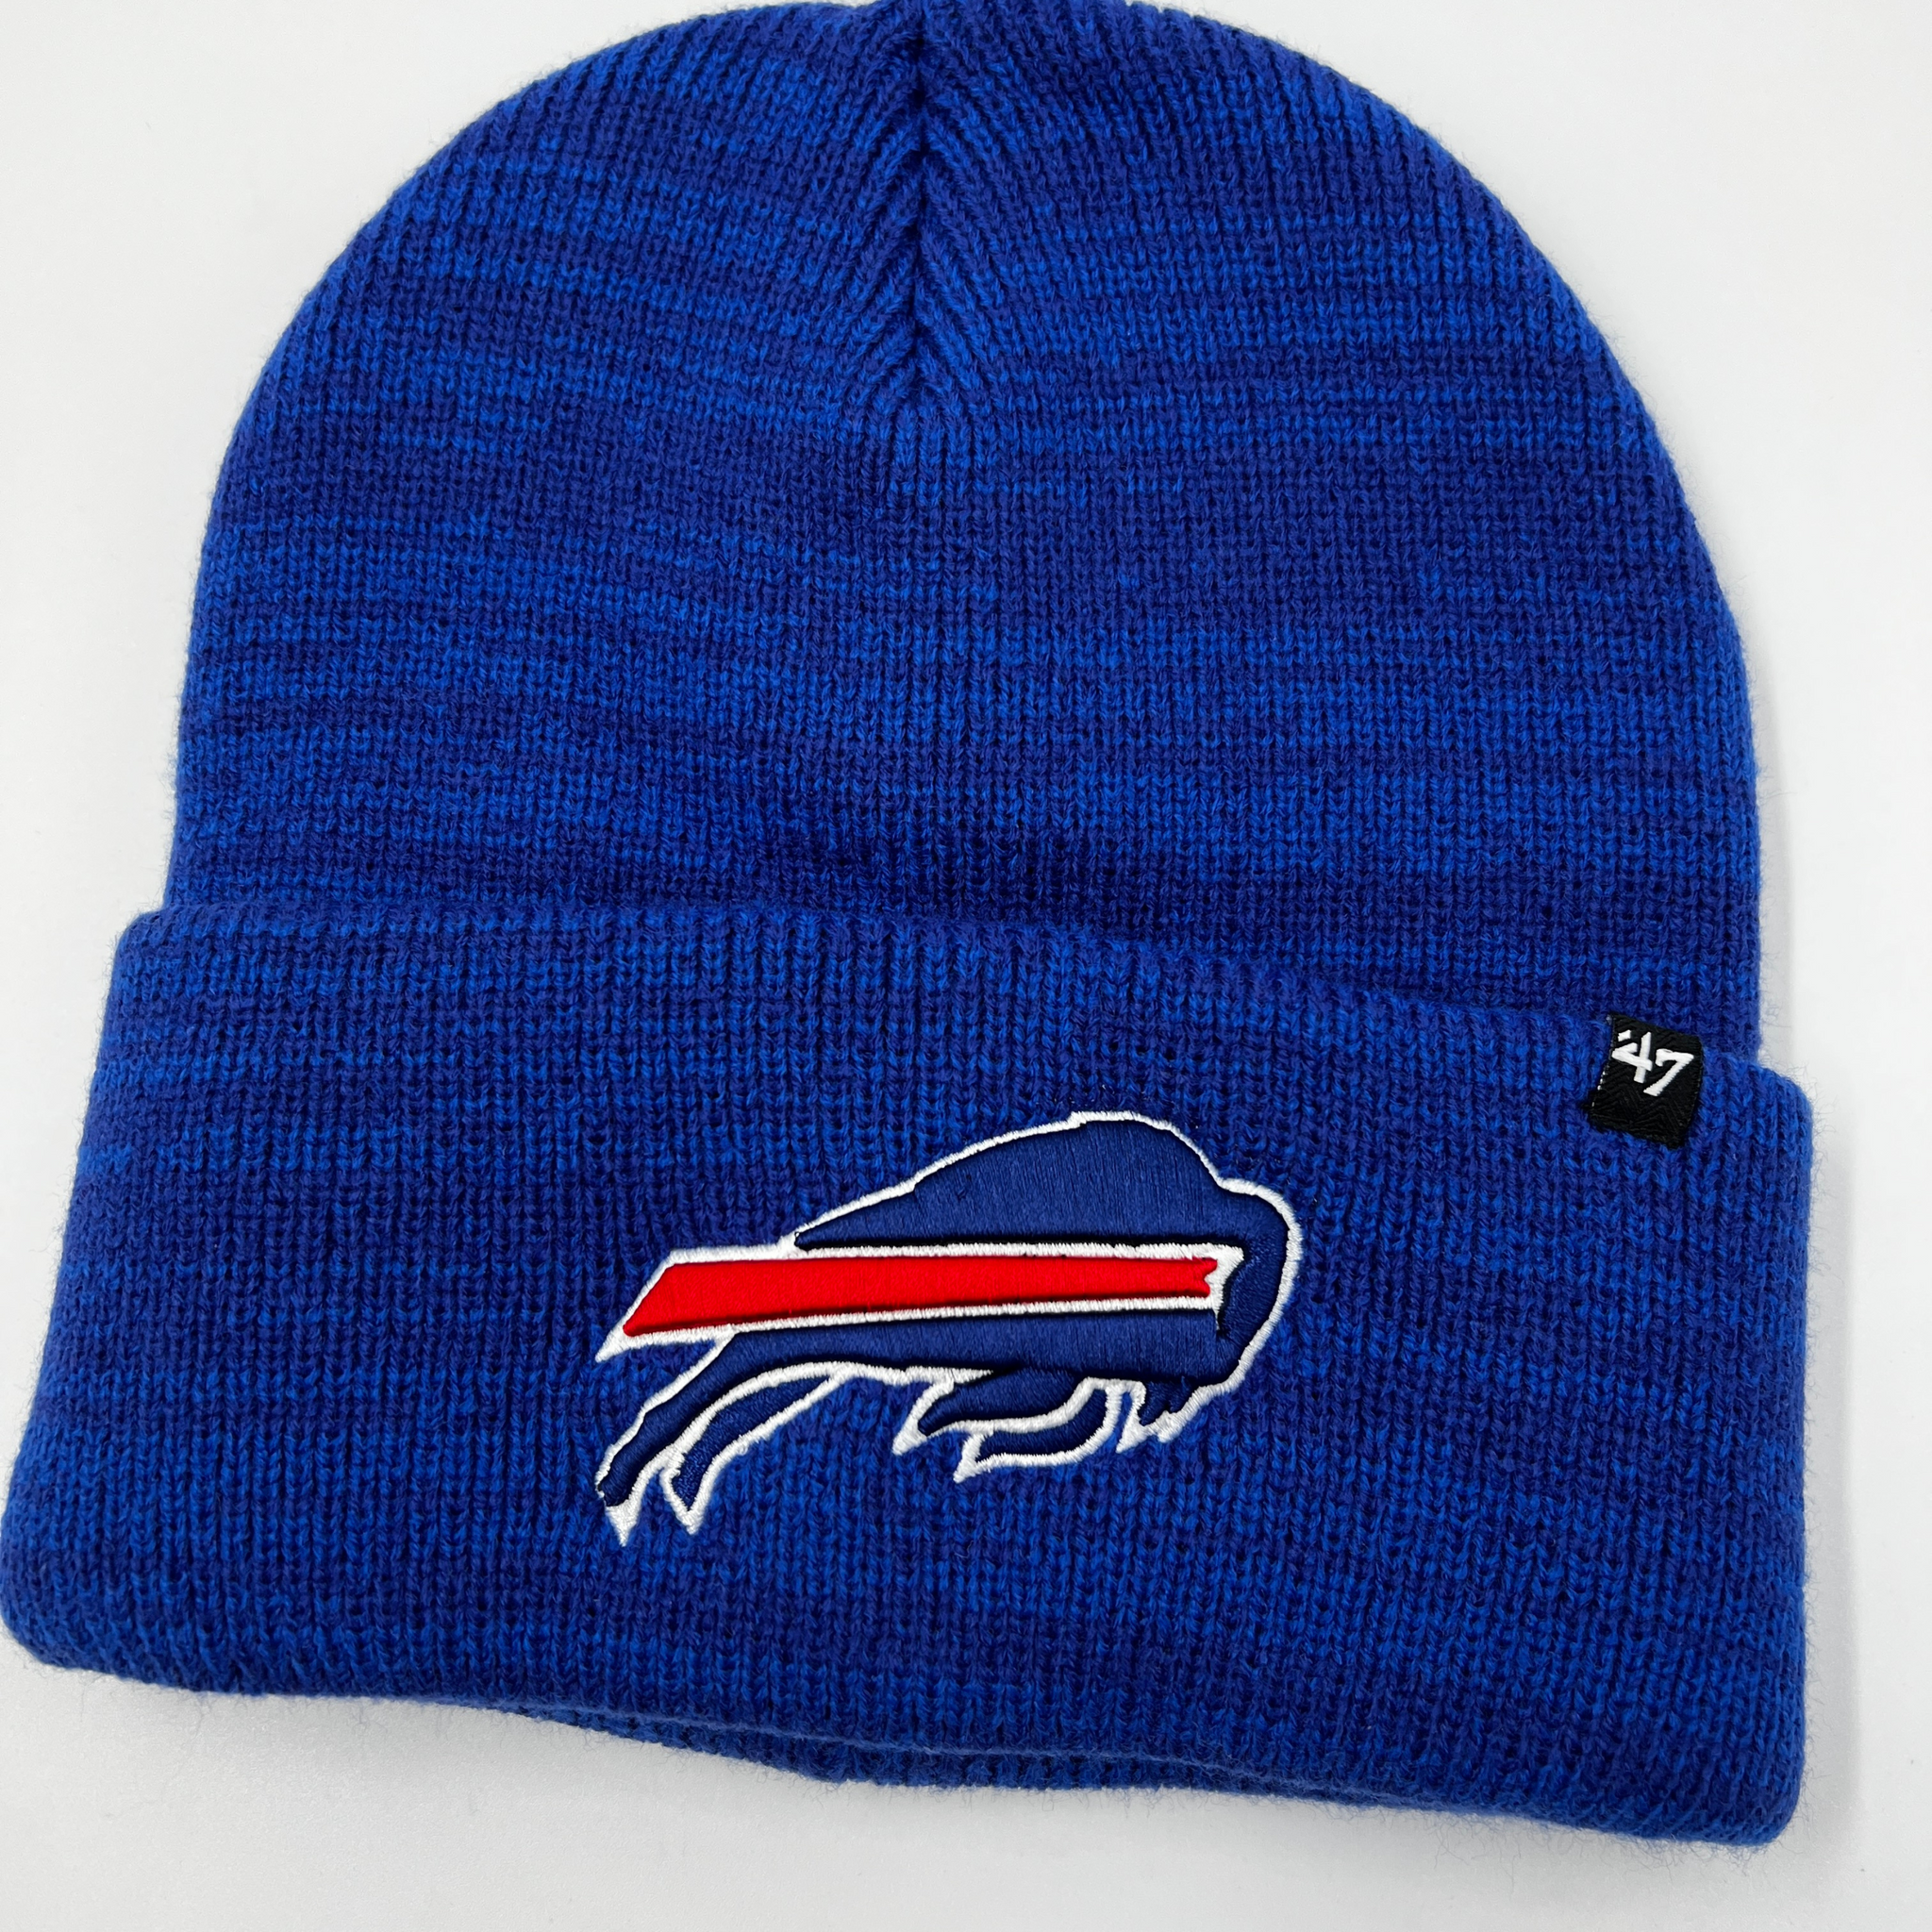 '47 Brand Buffalo Bills Royal Blue Knit Winter Hat